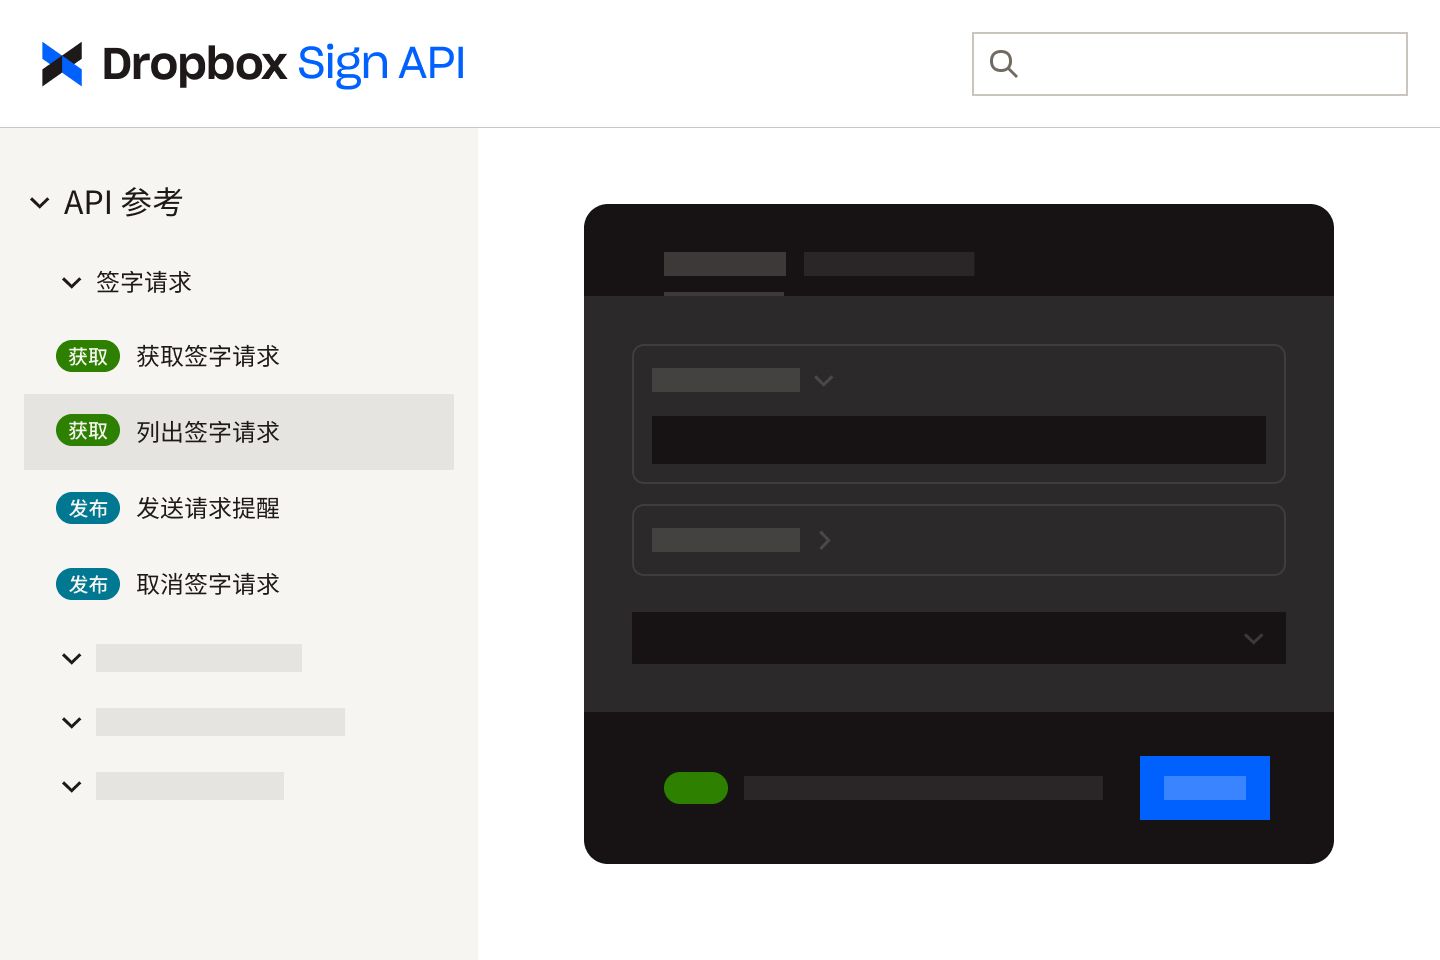 Dropbox Sign 的电子签名 API 界面